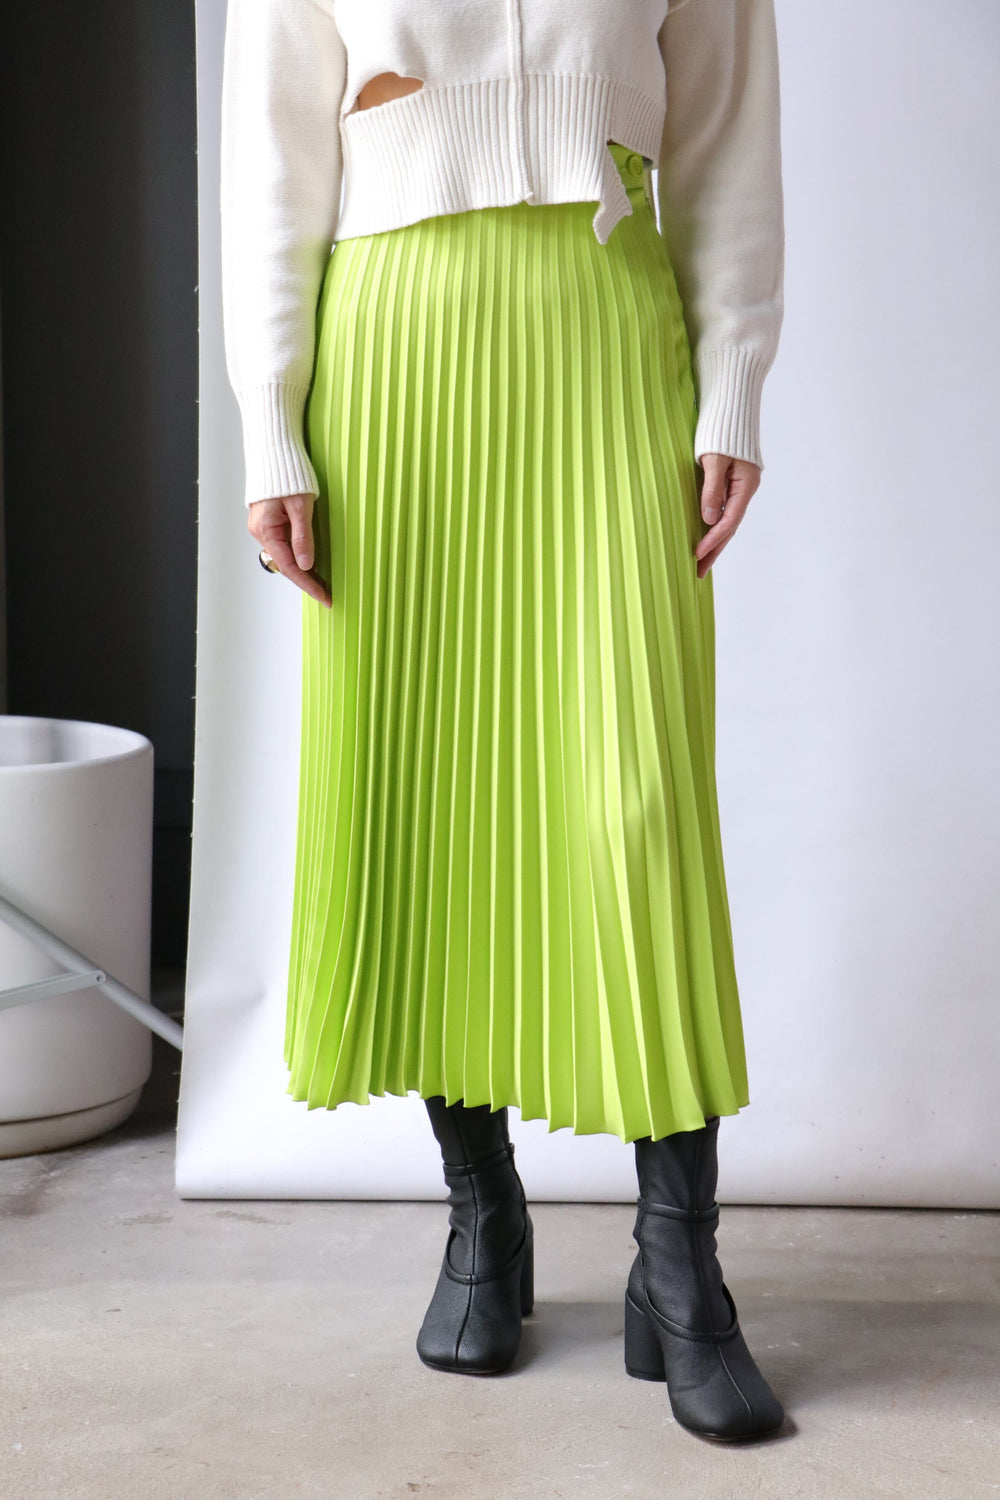 MM6 Maison Margiela Pleated Skirt in Neon Green